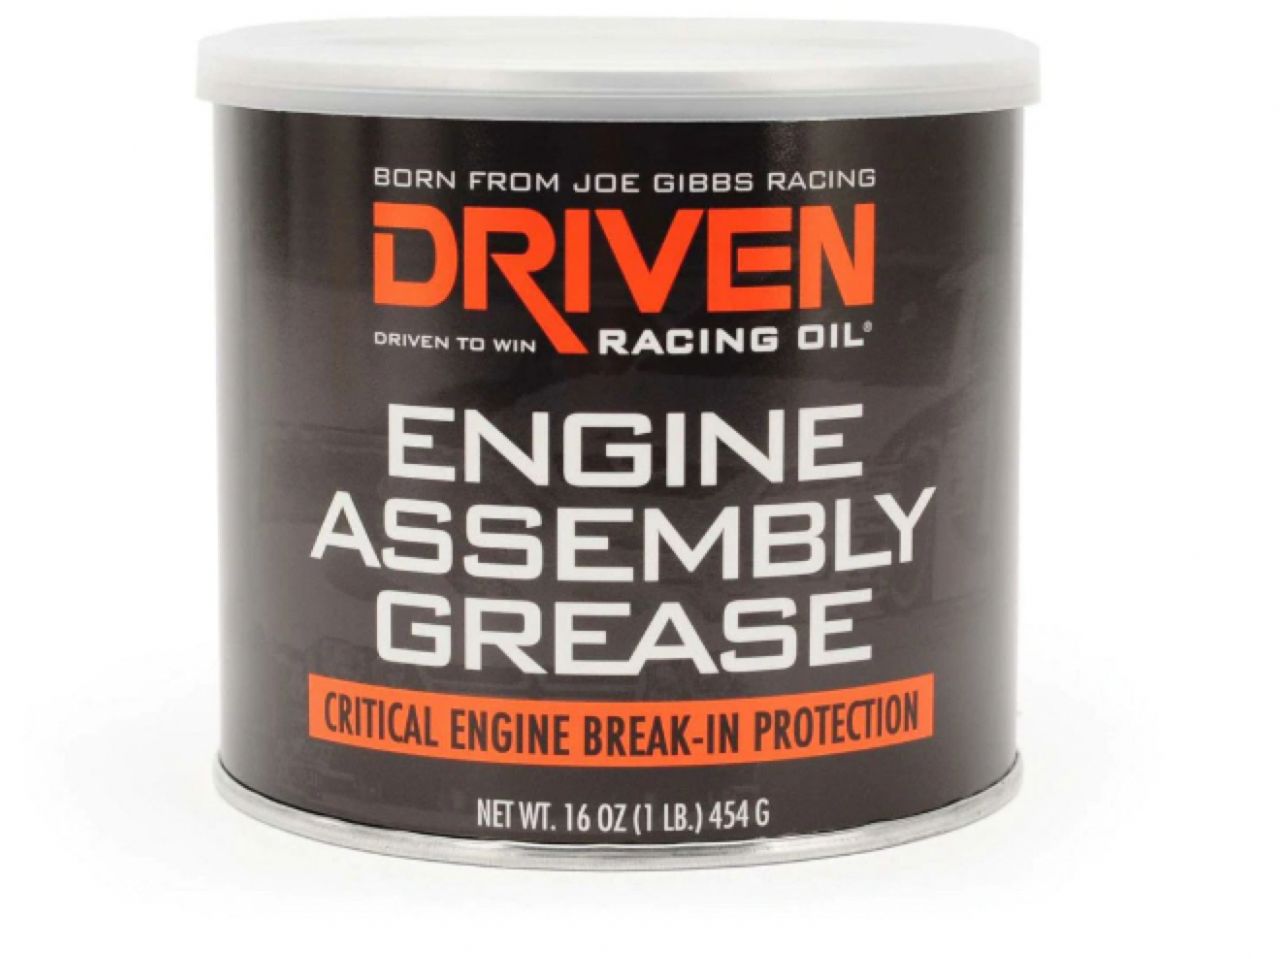 Driven Racing Oil Grease 00728 Item Image